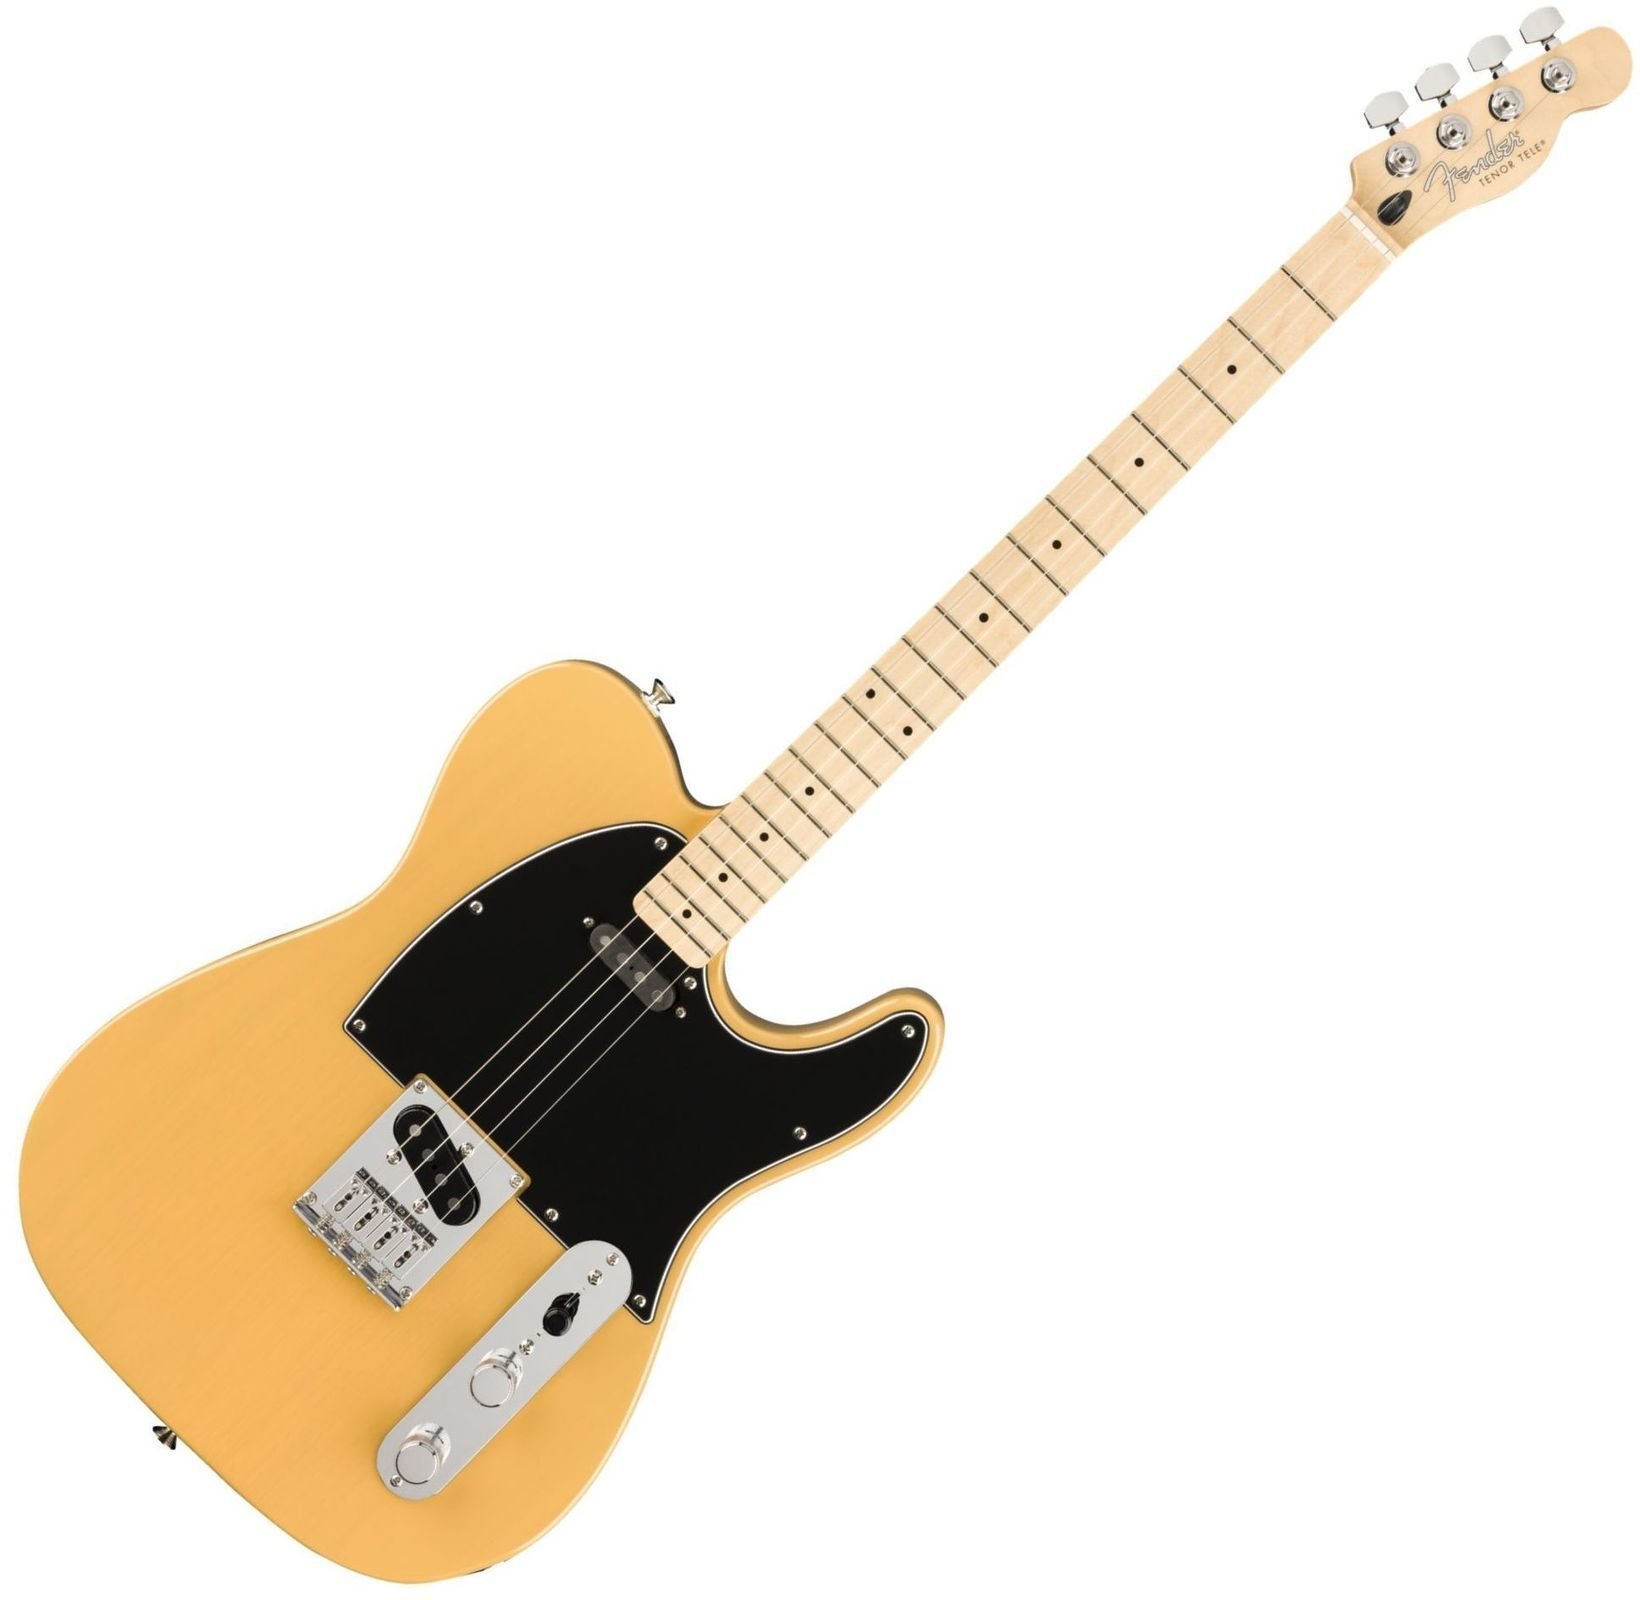 Tenor-ukuleler Fender Tele MN Tenor-ukuleler Butterscotch Blonde